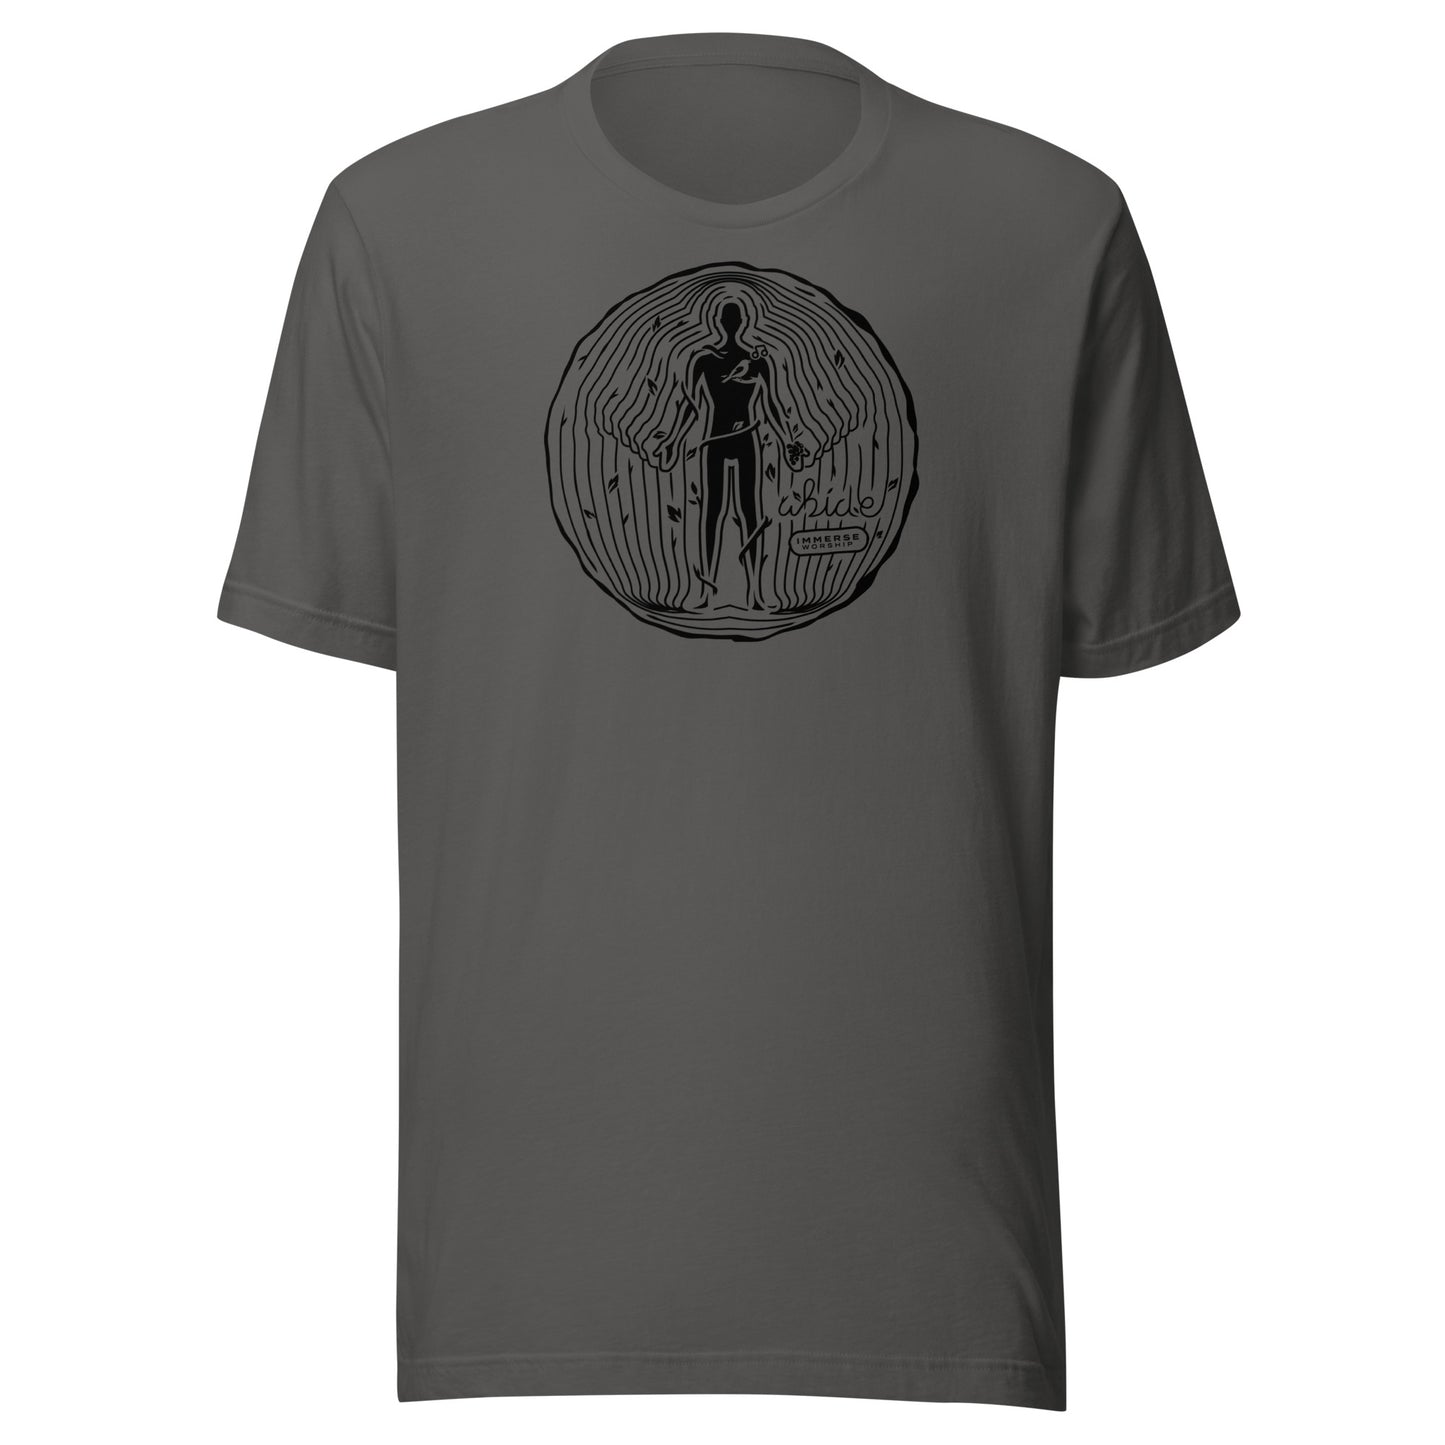 Abide - Immerse Worship T-Shirt